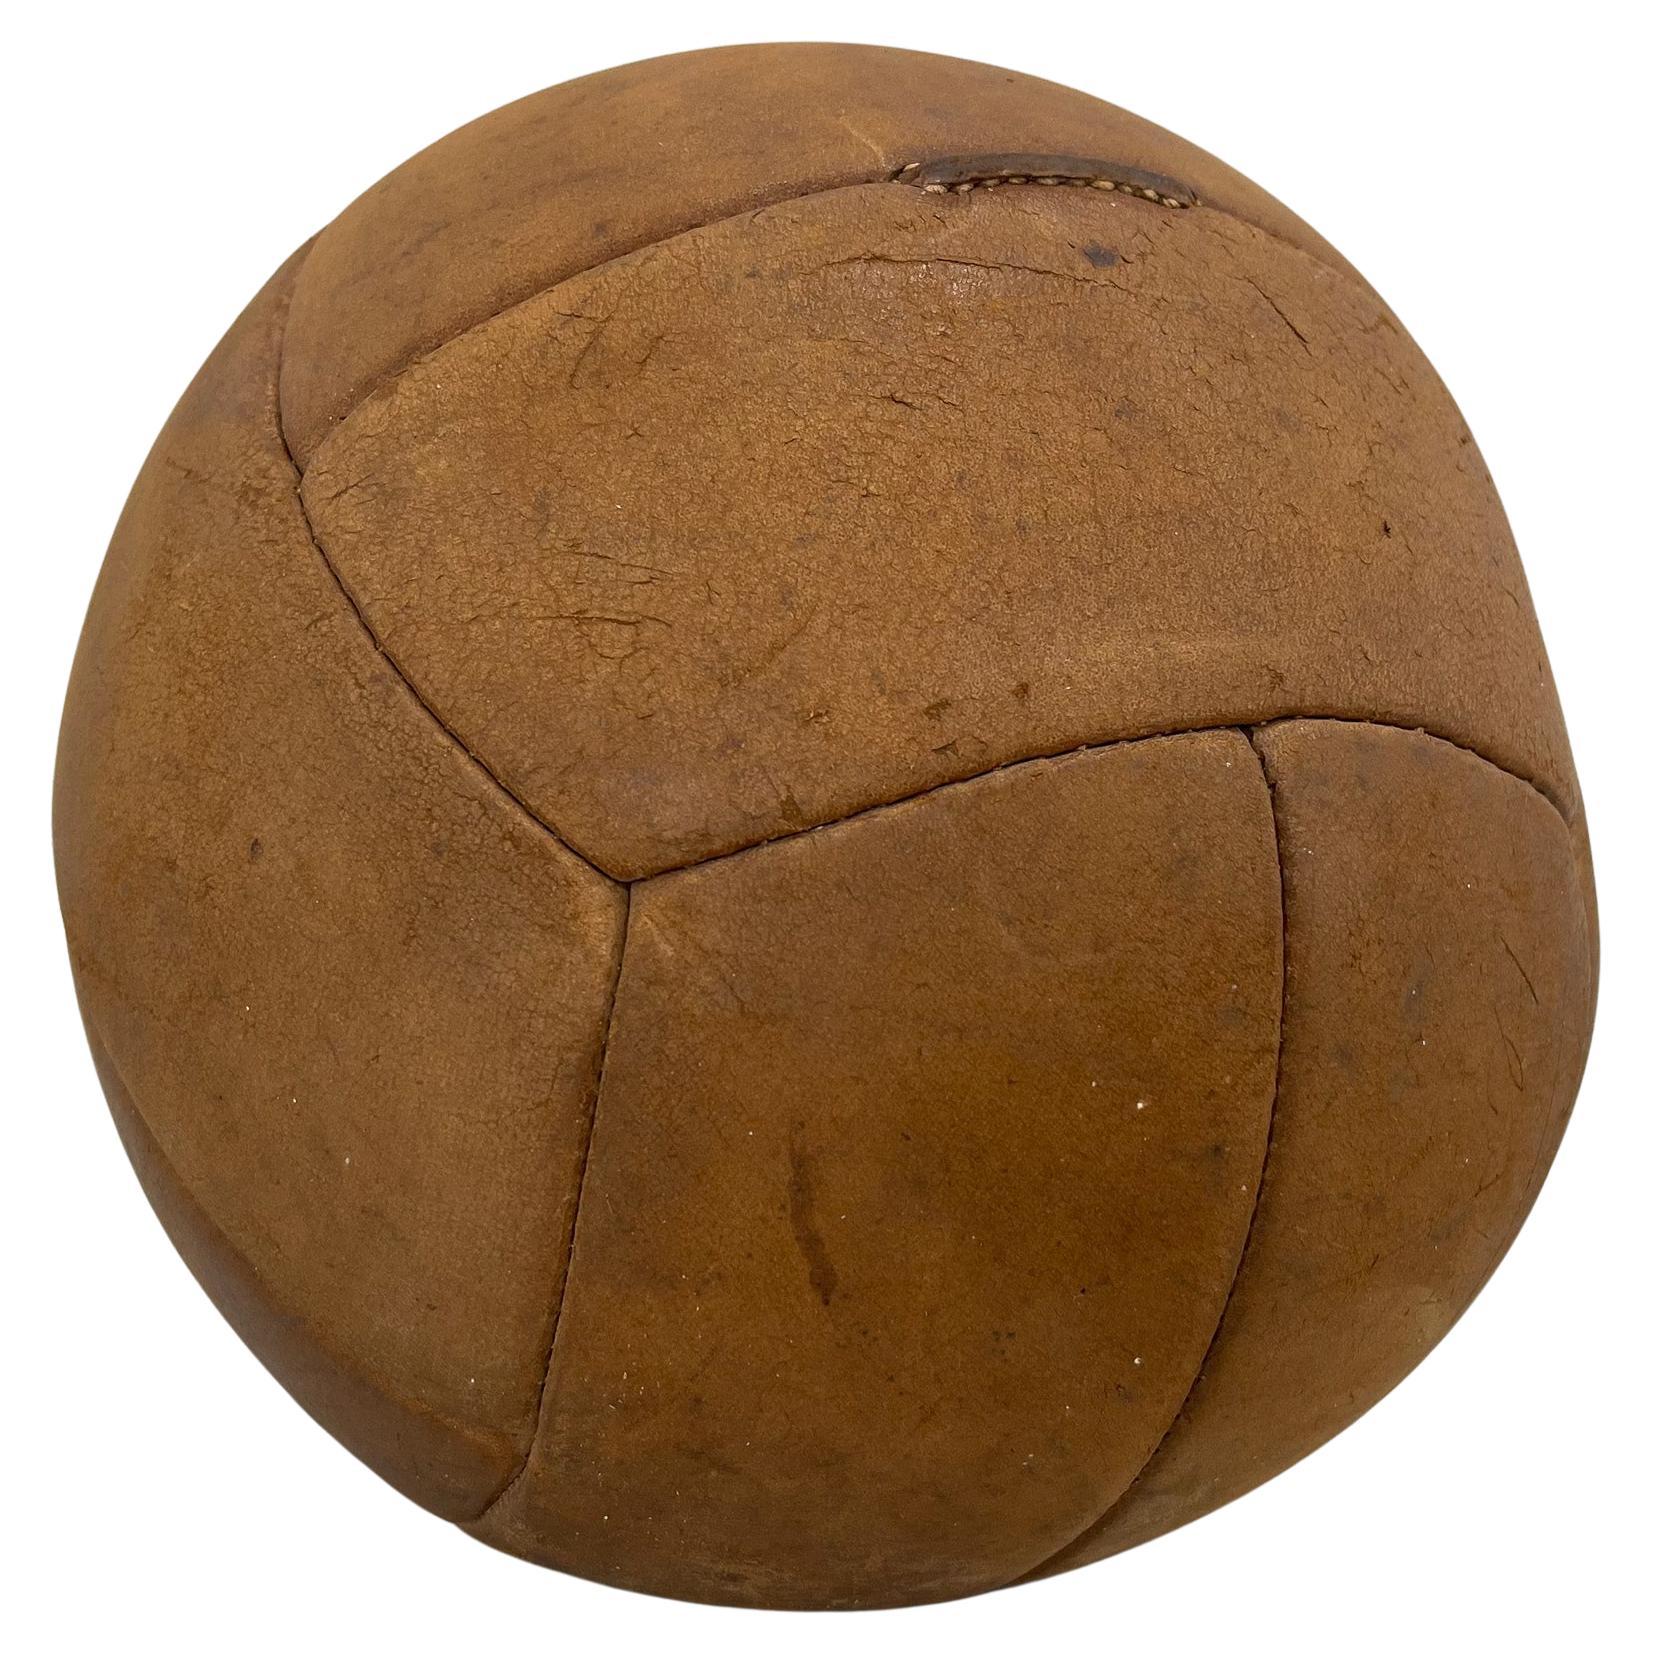 Vintage Brown Leather Medicine Ball, 1930s 